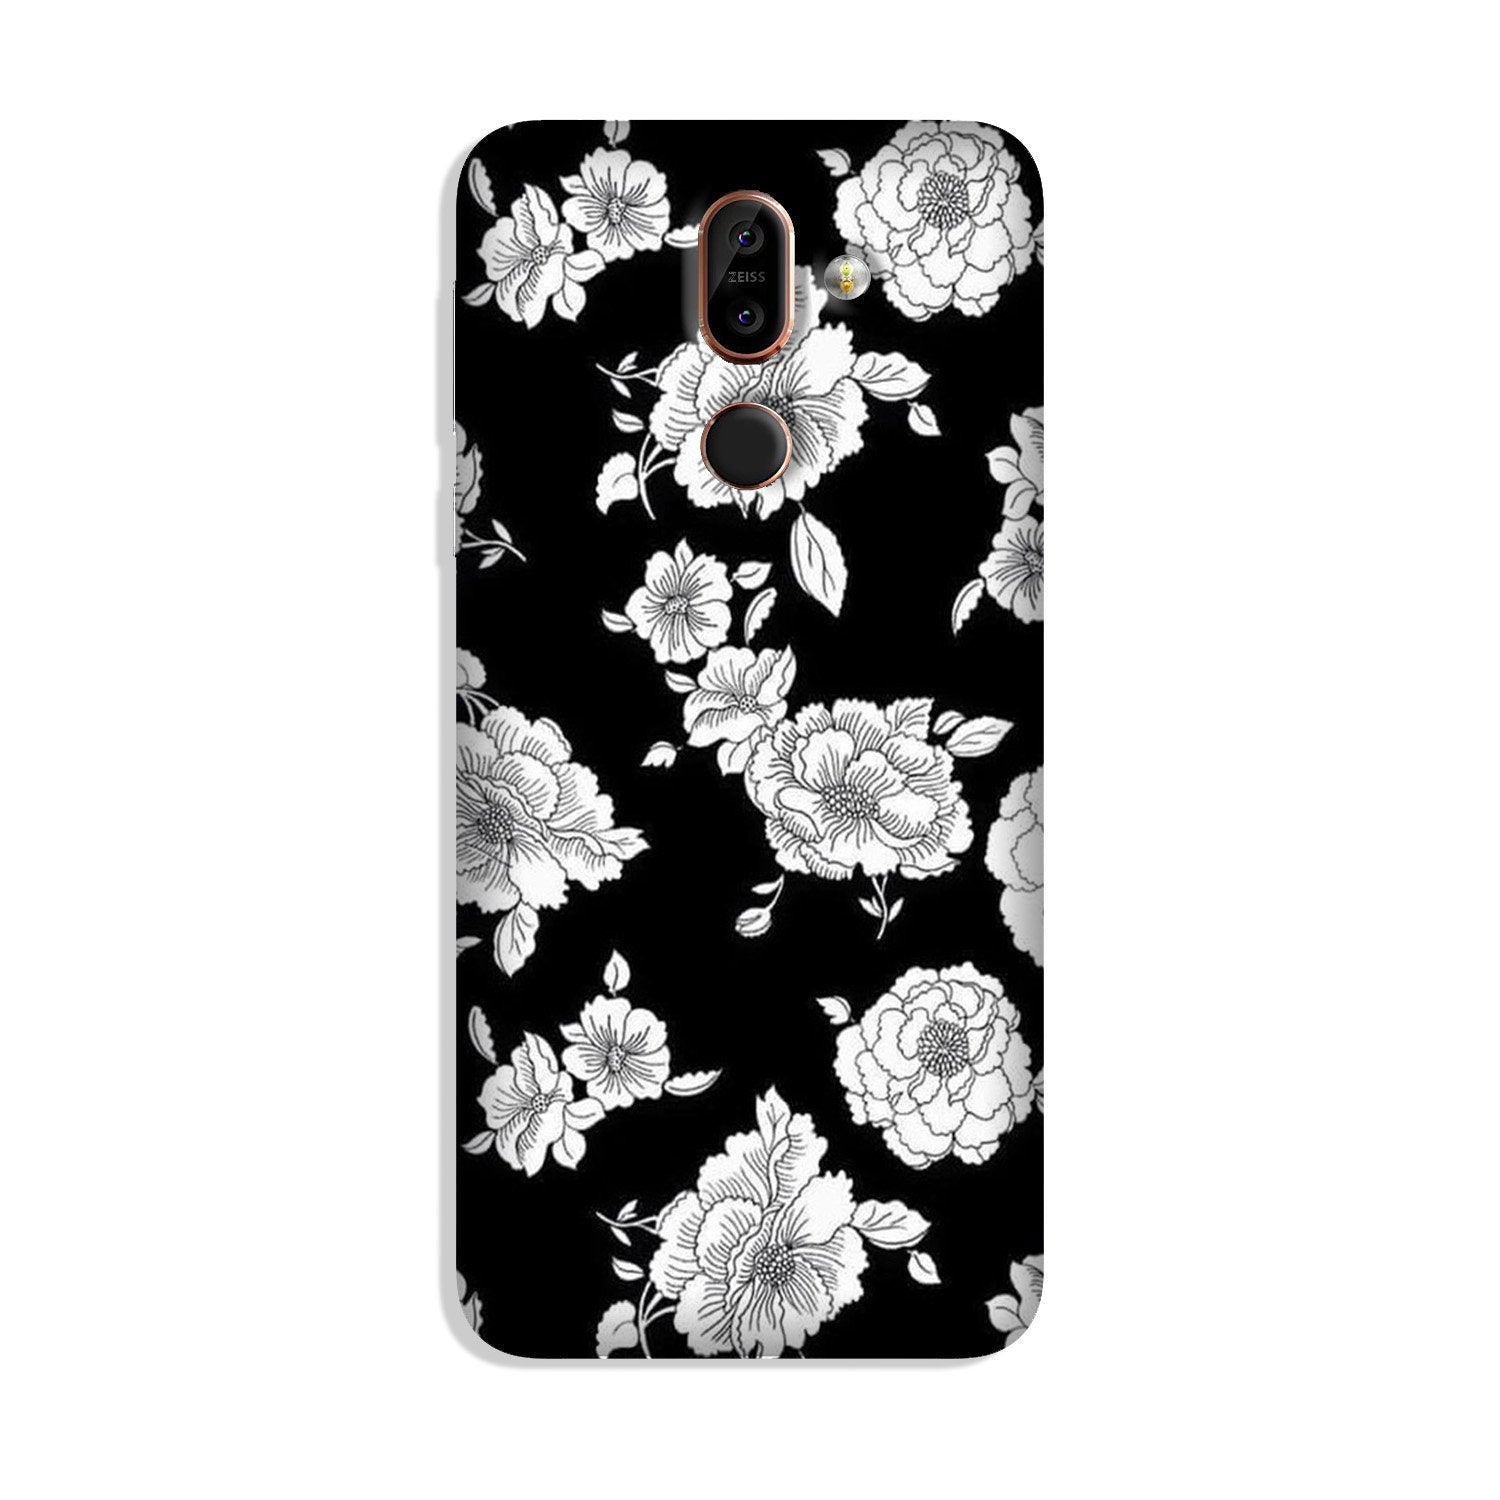 White flowers Black Background Case for Nokia 8.1